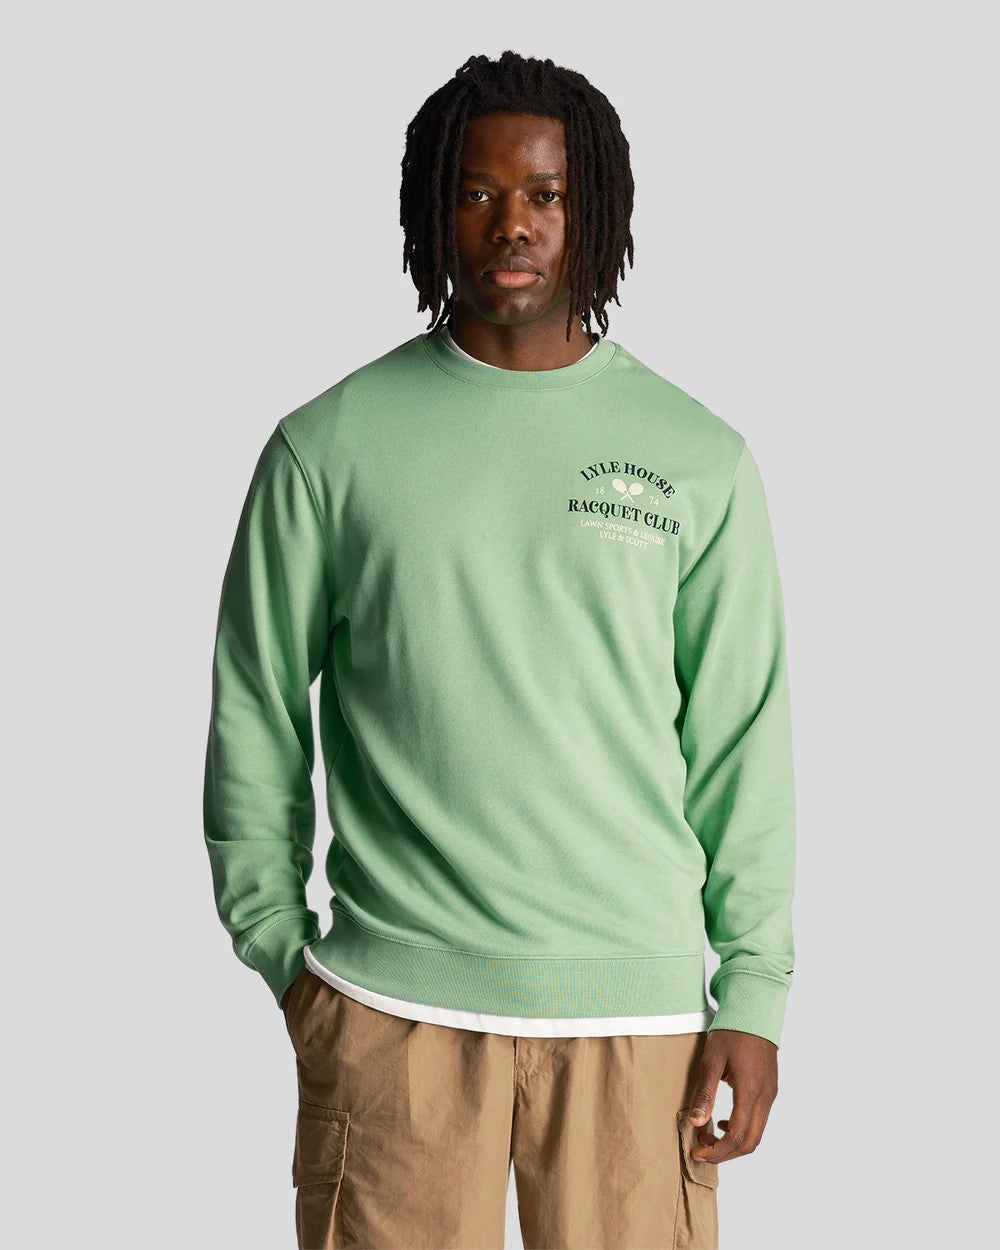 Racquet Club Graphic Sweatshirt